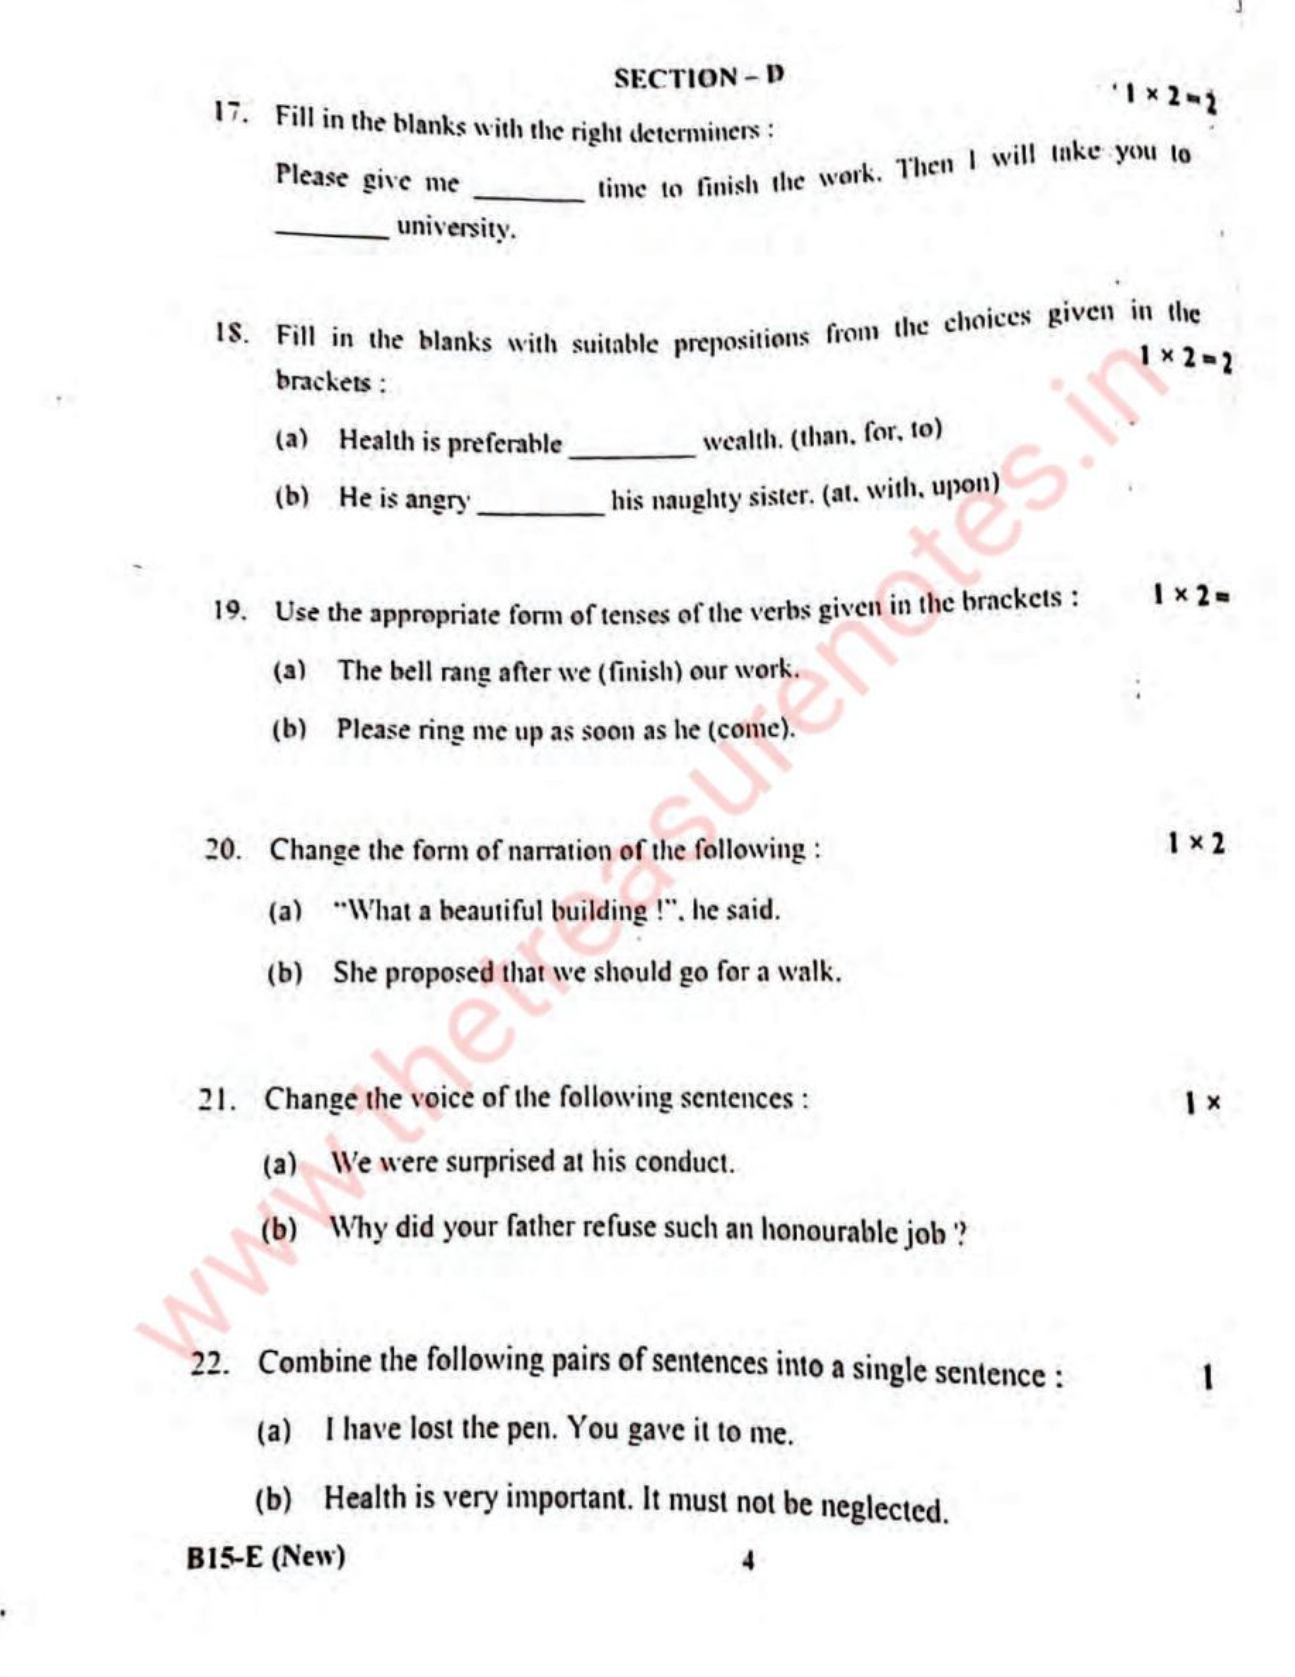 HSLC English Question Paper'2015 SEBA Board | Assam Class 10 English Question Paper'2015